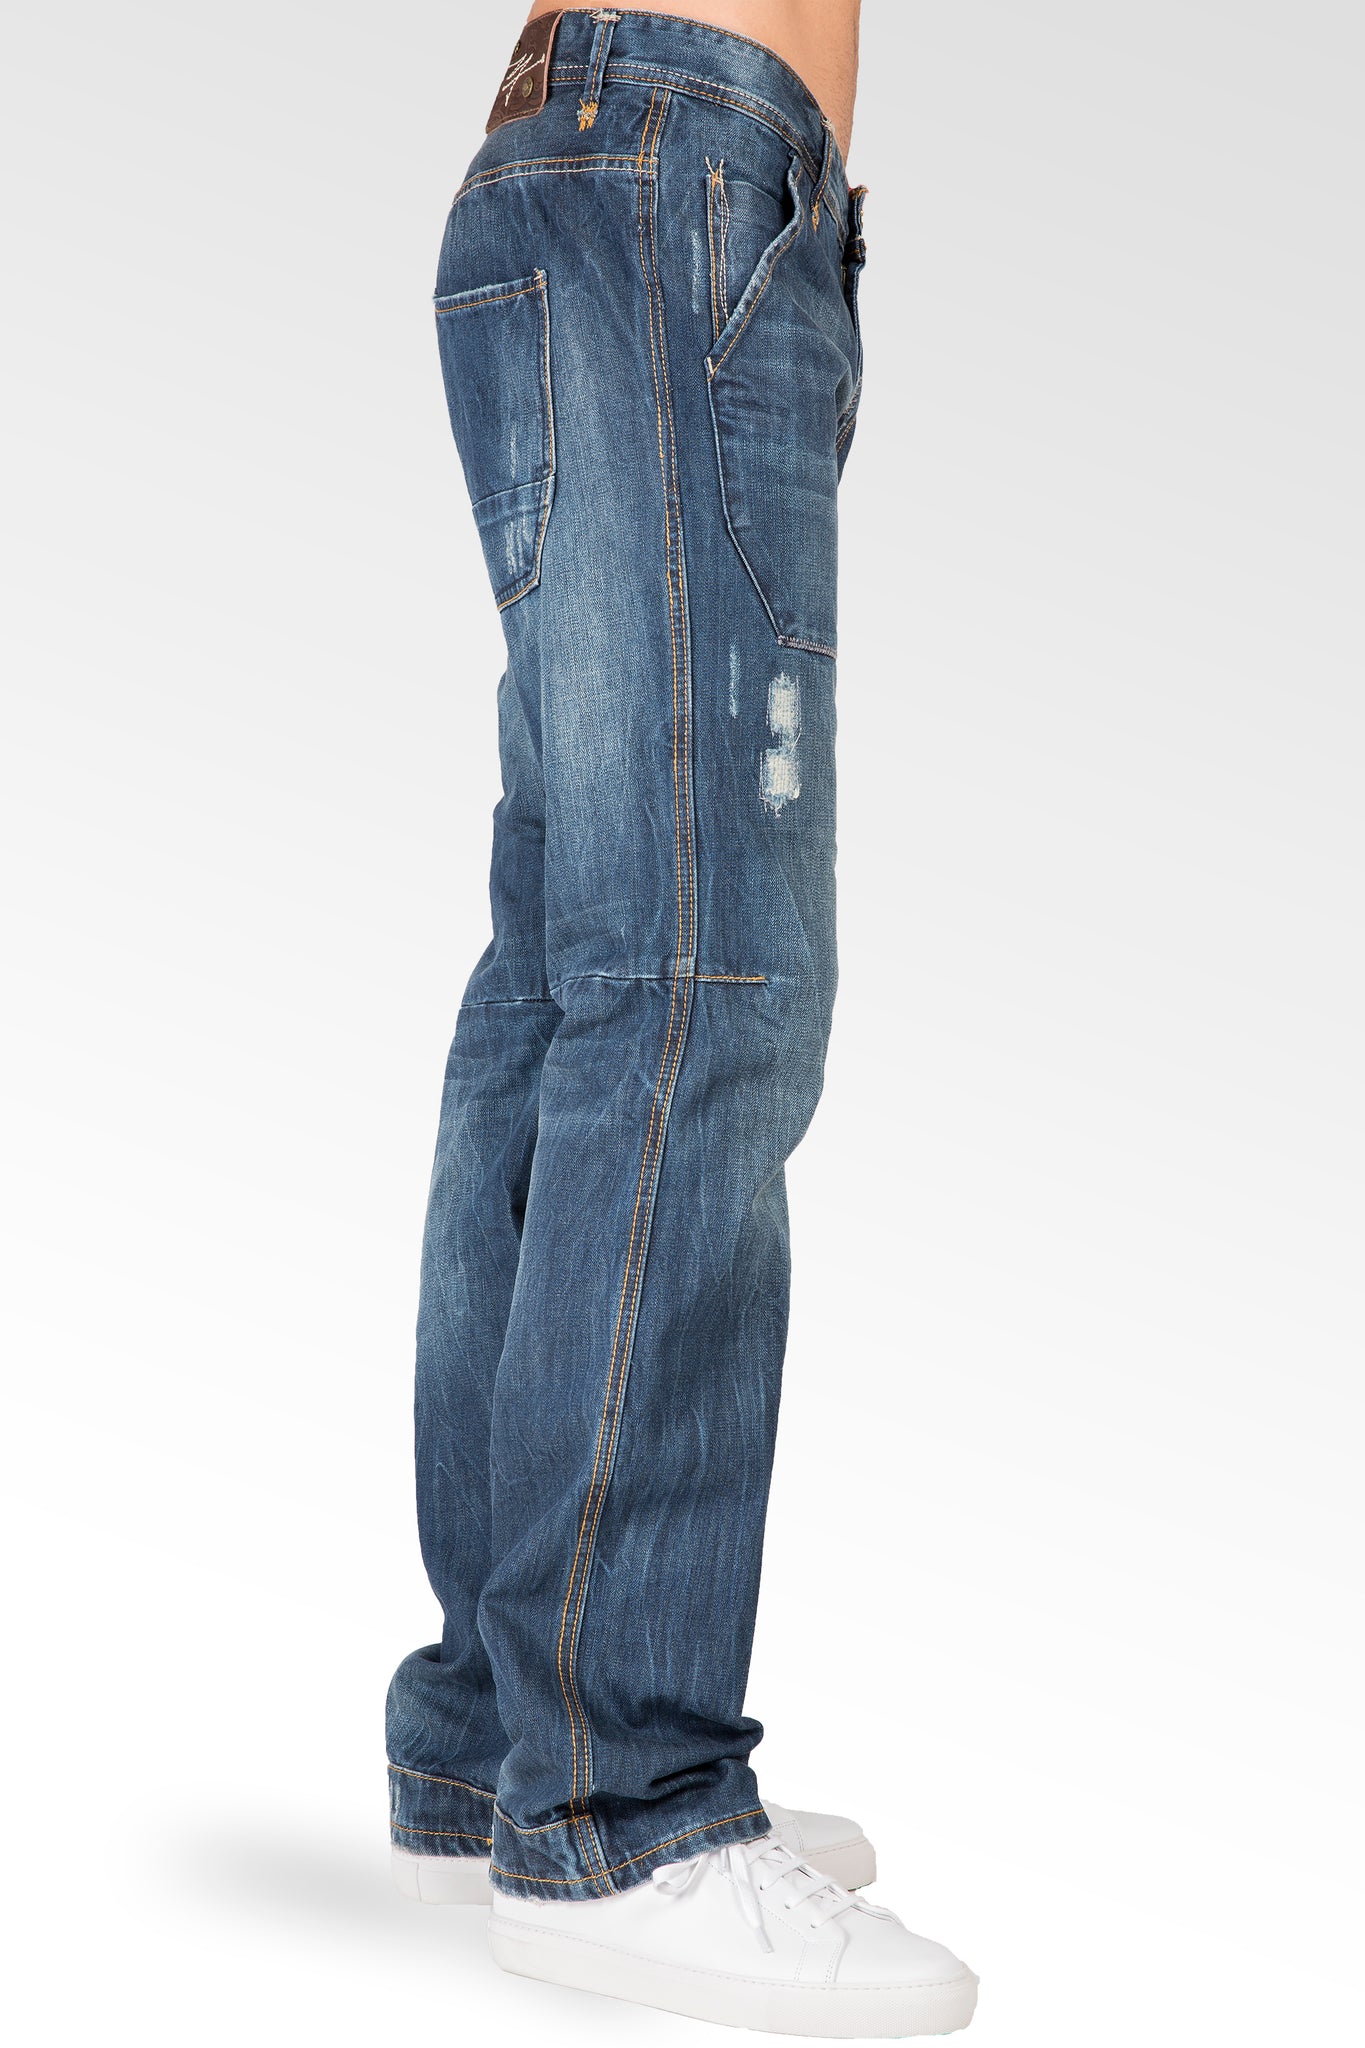 Slim Straight Vintage Hand Sanding Premium Denim 5 Pocket Jeans Ripped & Repaired